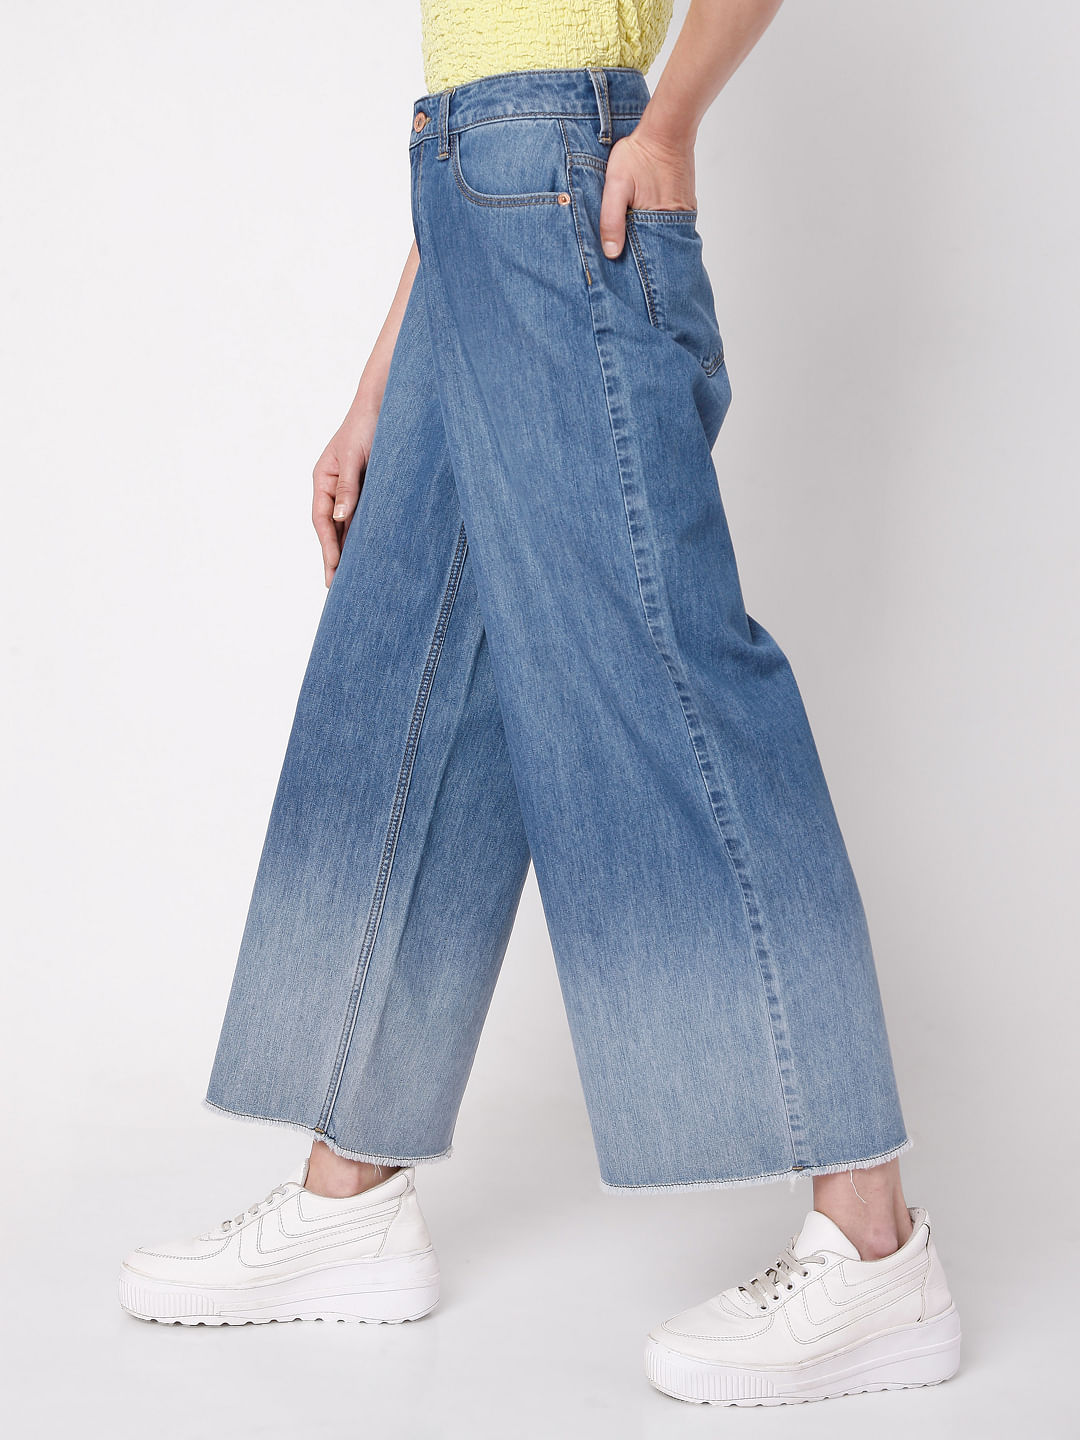 Buy Blue Jeans  Jeggings for Women by Fyre Rose Online  Ajiocom